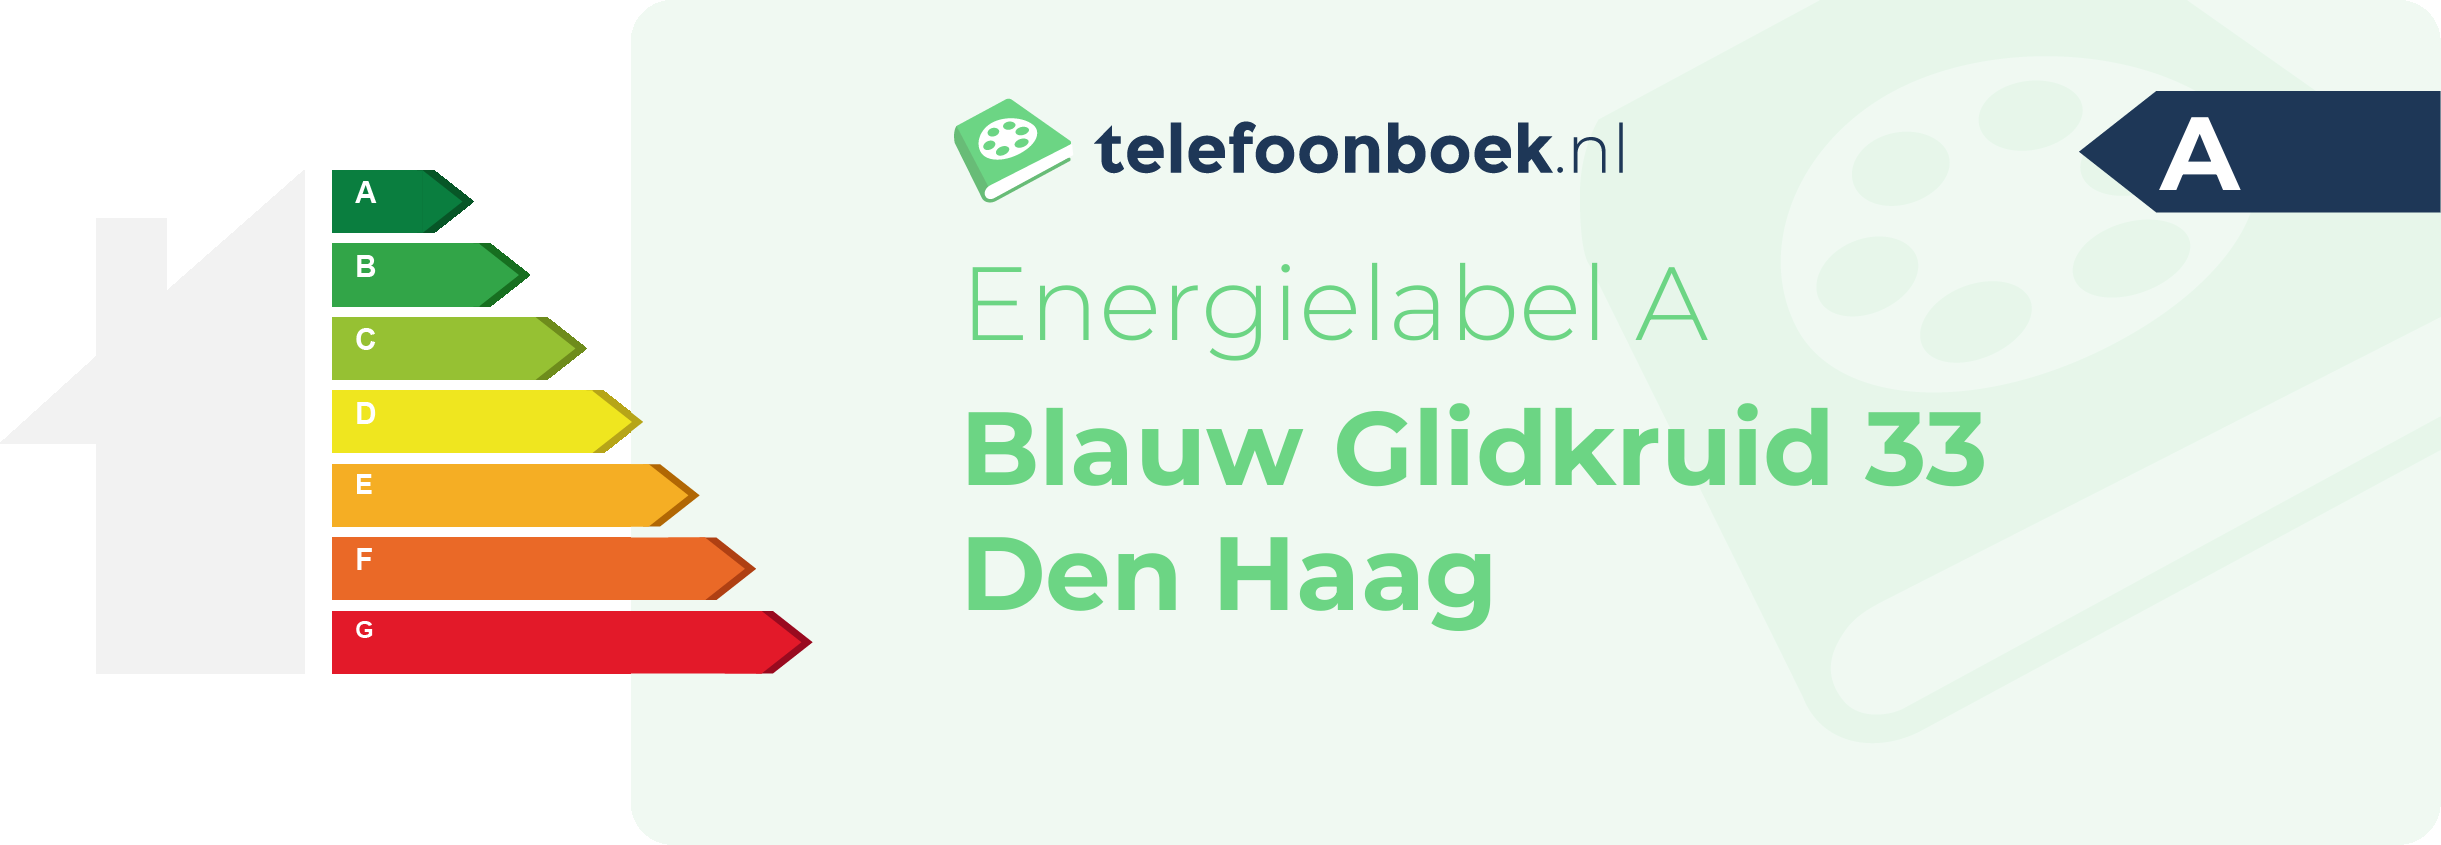 Energielabel Blauw Glidkruid 33 Den Haag